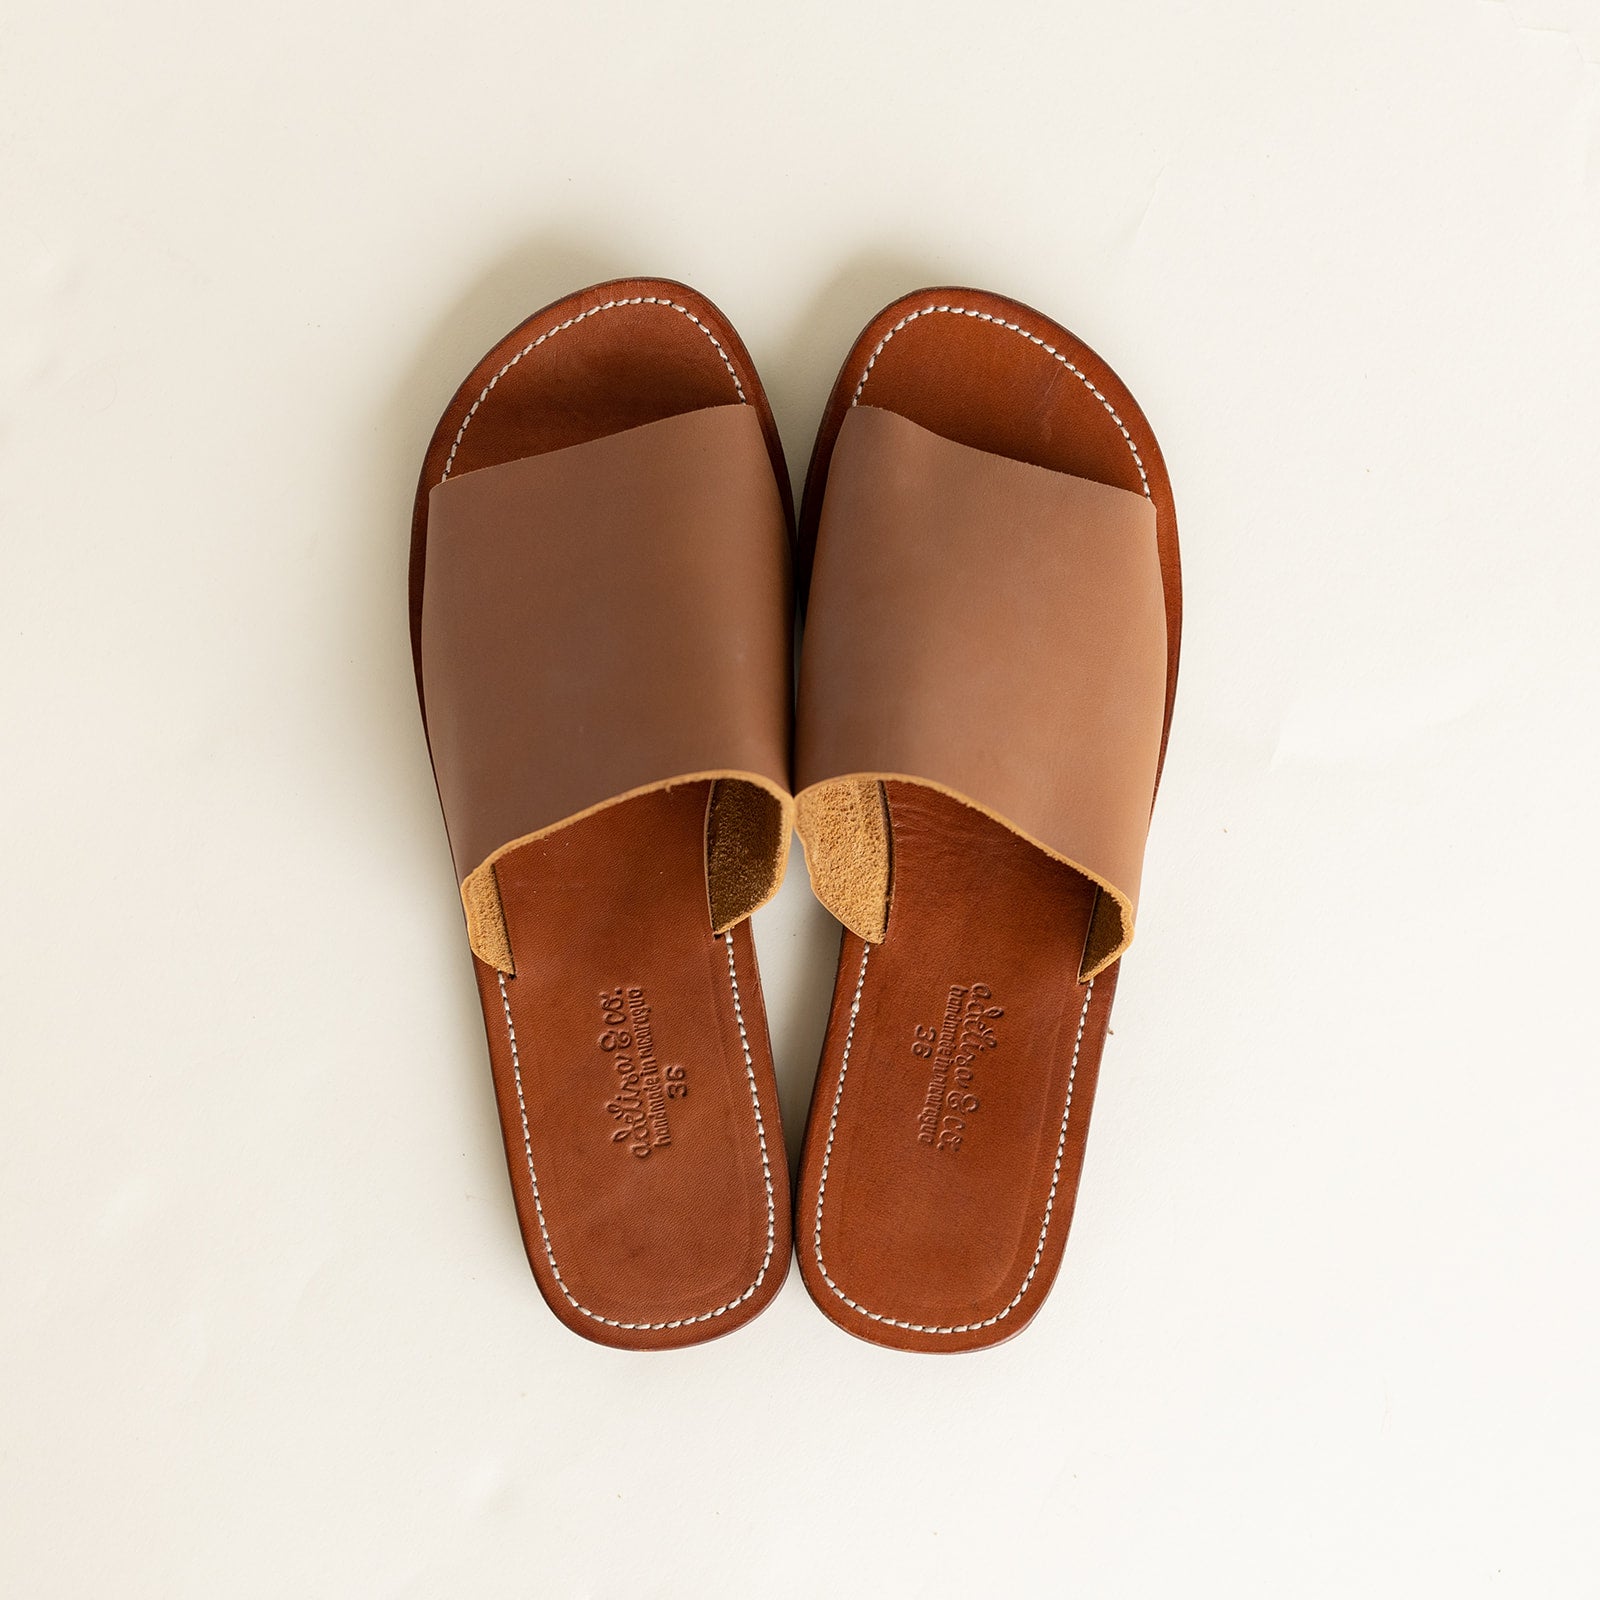 Isabel Marant Jostee Metallic Leather Sandals | Fashion shoes sandals,  Fashion sandals, Leather sandals flat